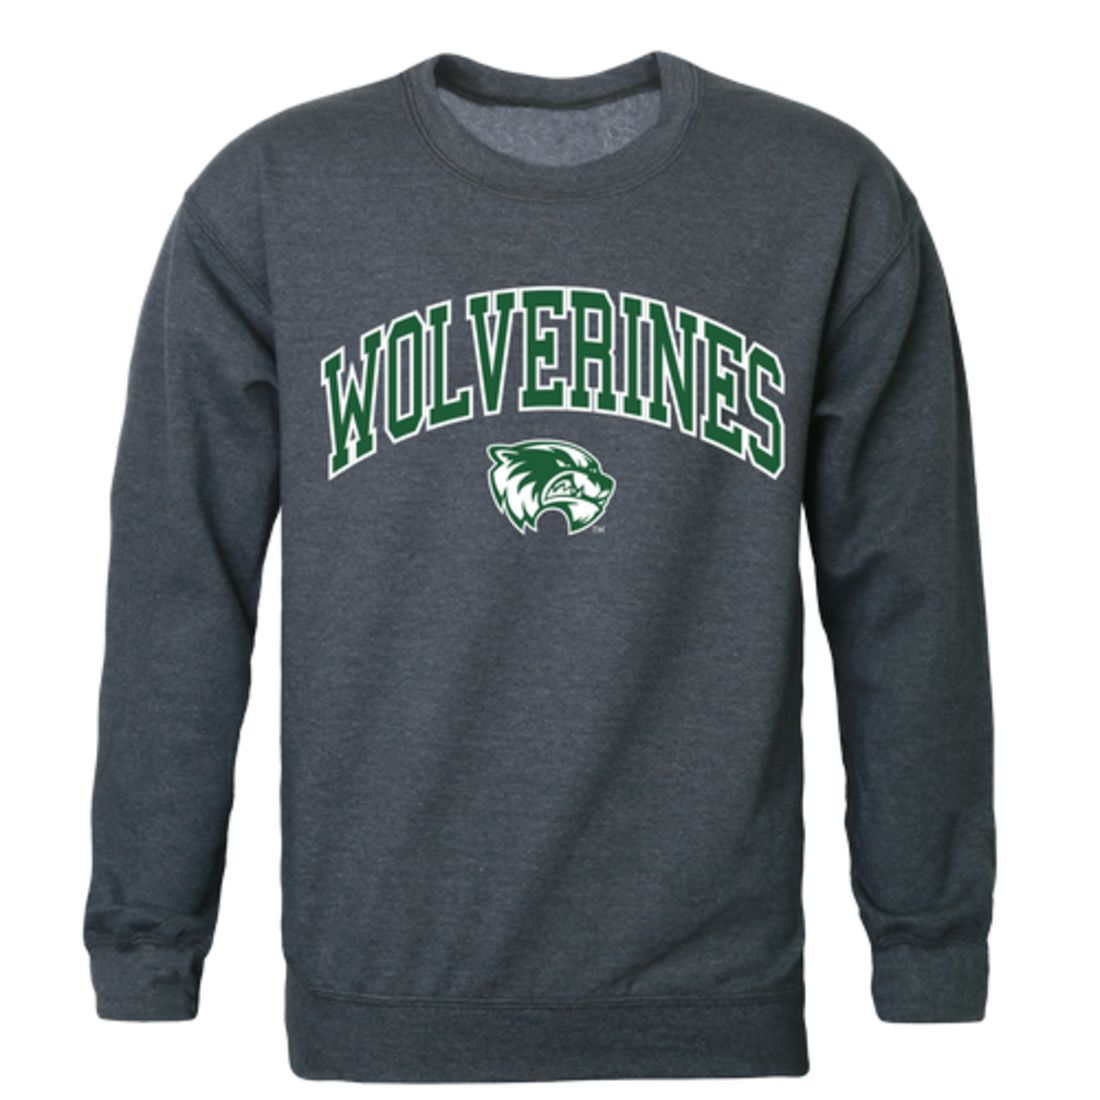 UVU Utah Valley University Campus Crewneck Pullover Sweatshirt Sweater Heather Charcoal-Campus-Wardrobe